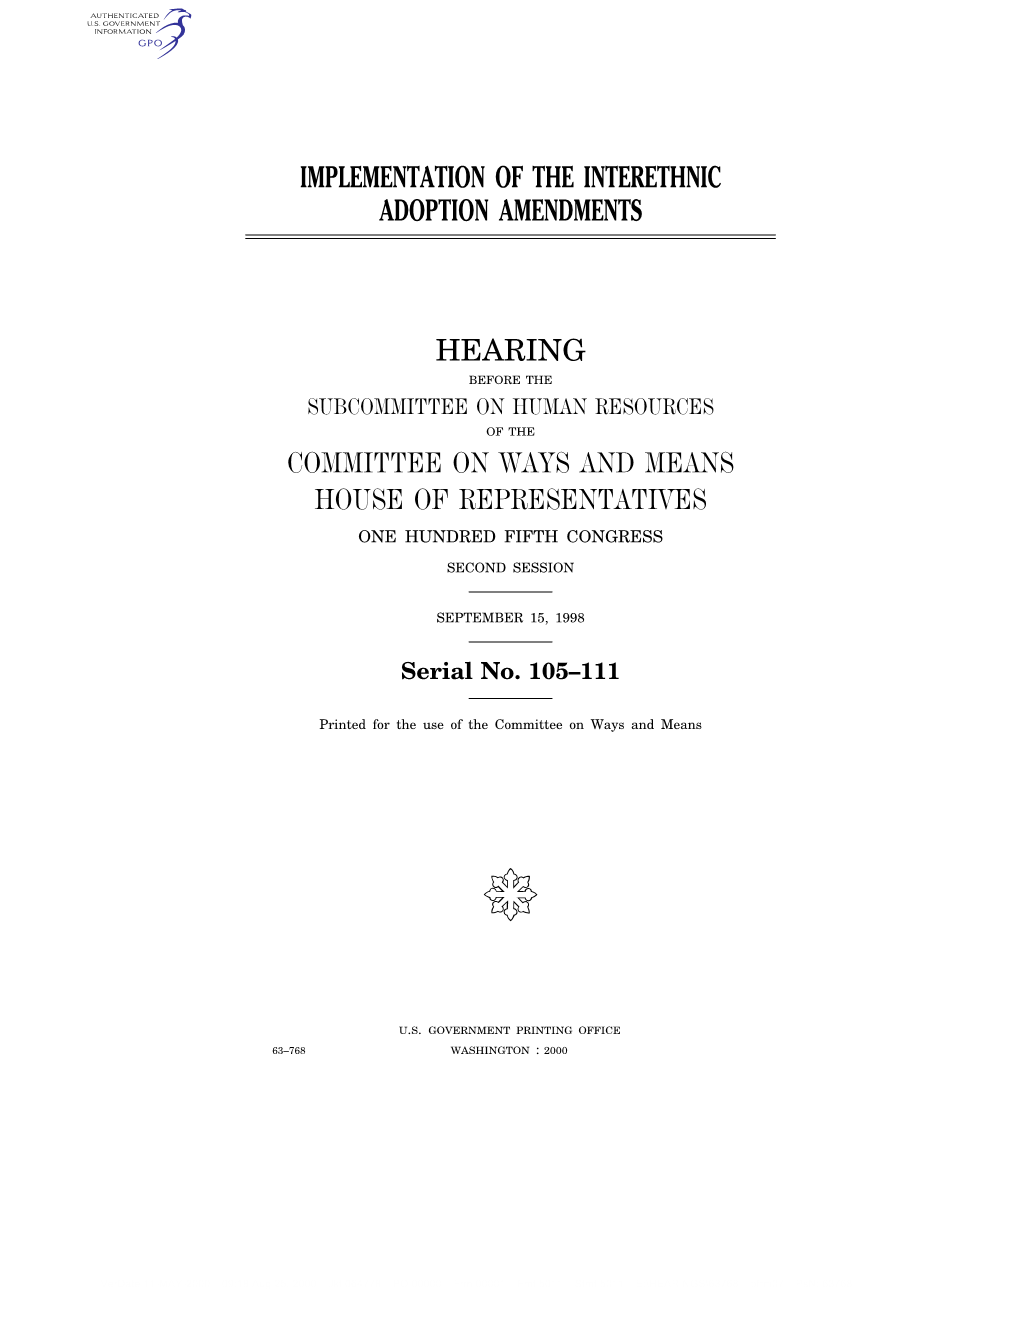 Implementation of the Interethnic Adoption Amendments